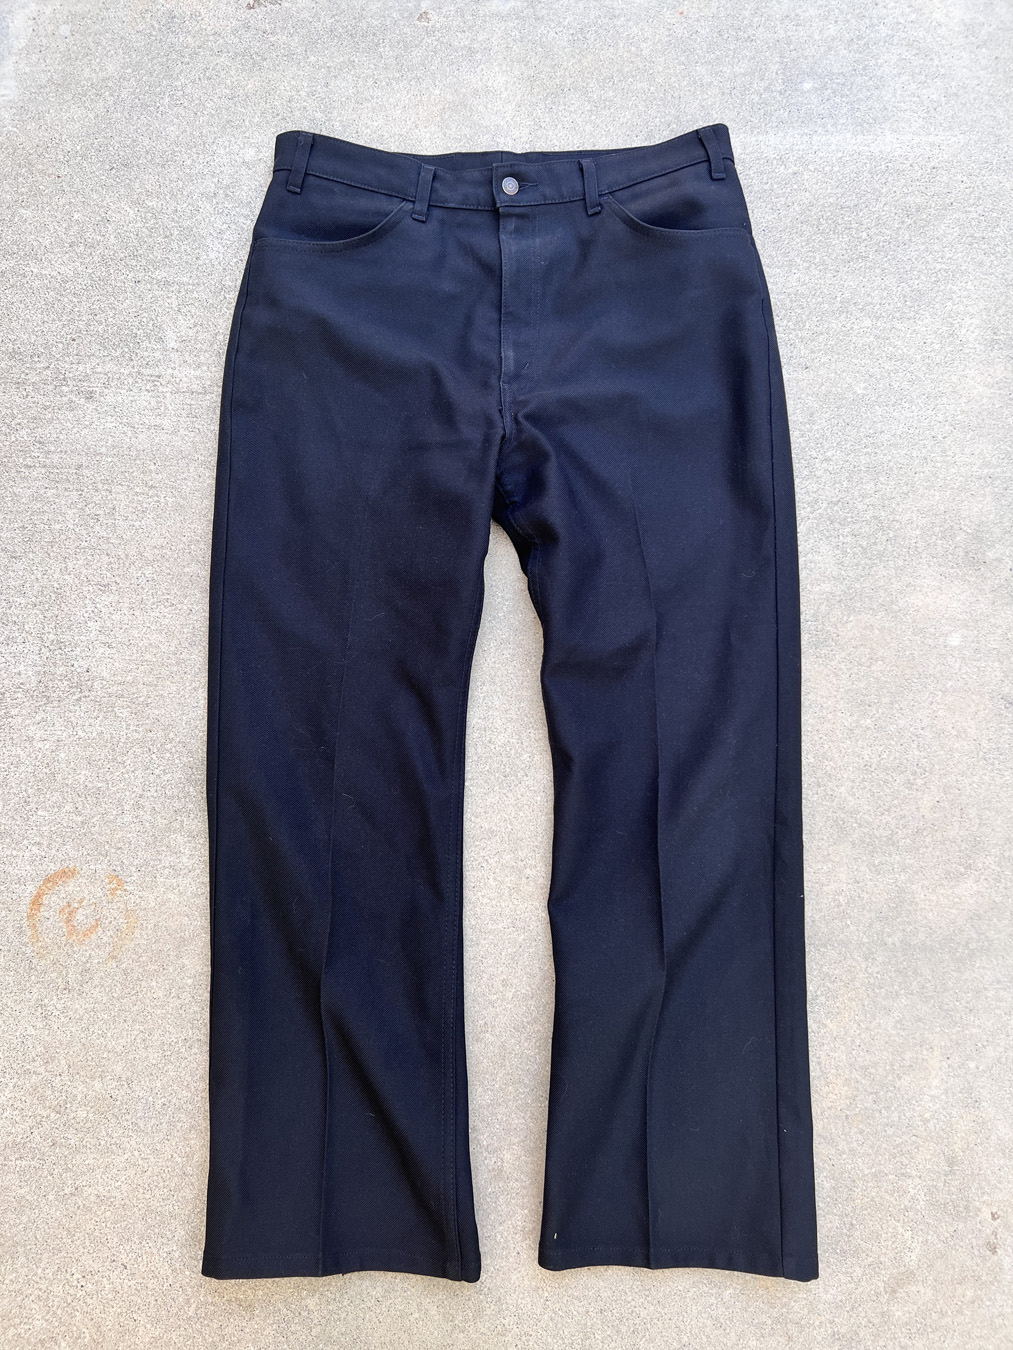 Vintage Black Levi's Polyester Bootcut Pants - 5 Star Vintage